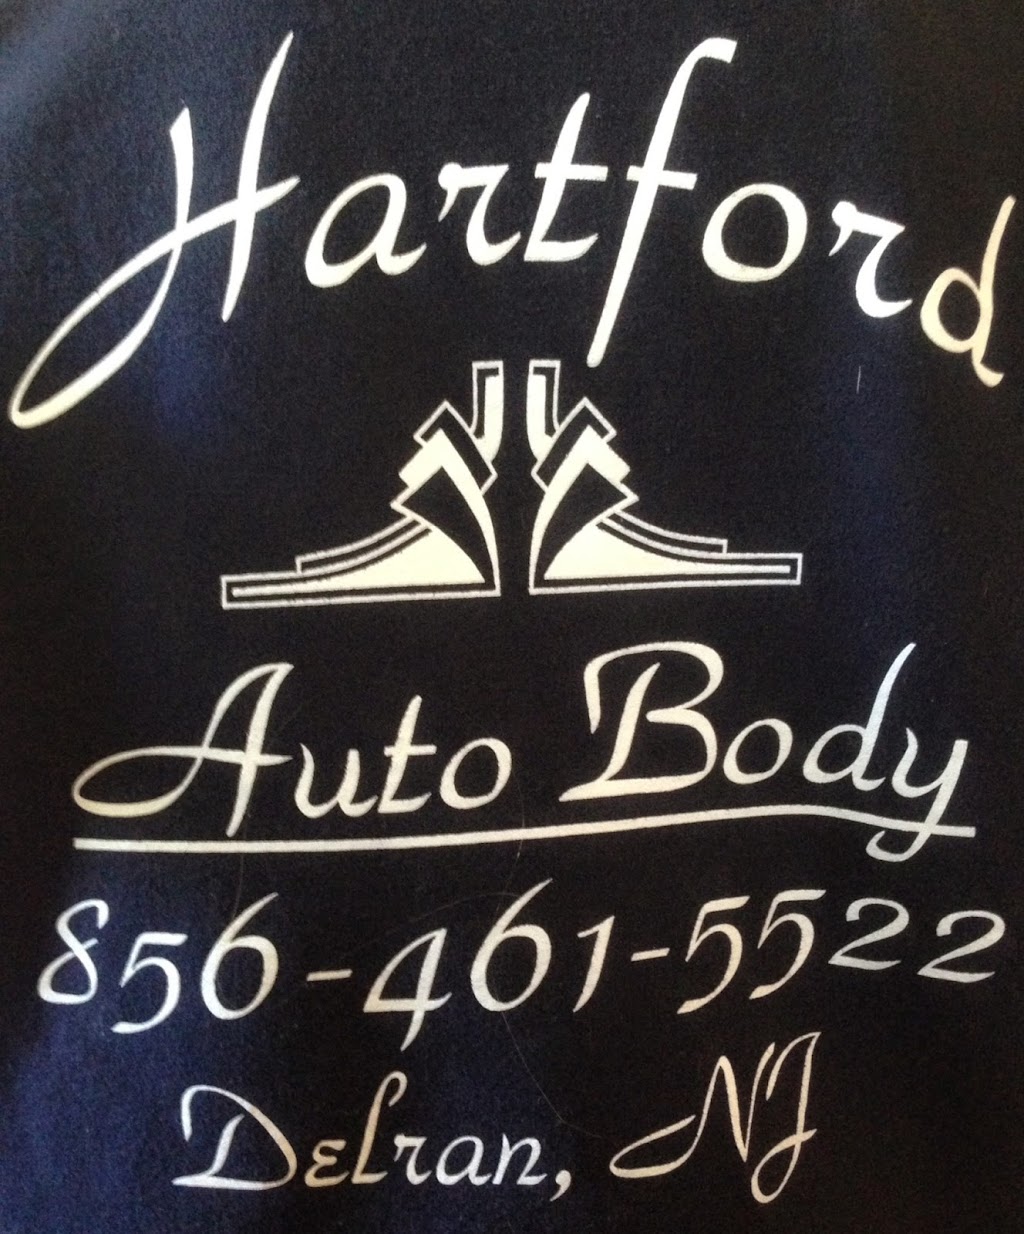 Hartford Auto Body | 44 Hartford Rd, Delran, NJ 08075 | Phone: (856) 461-5522